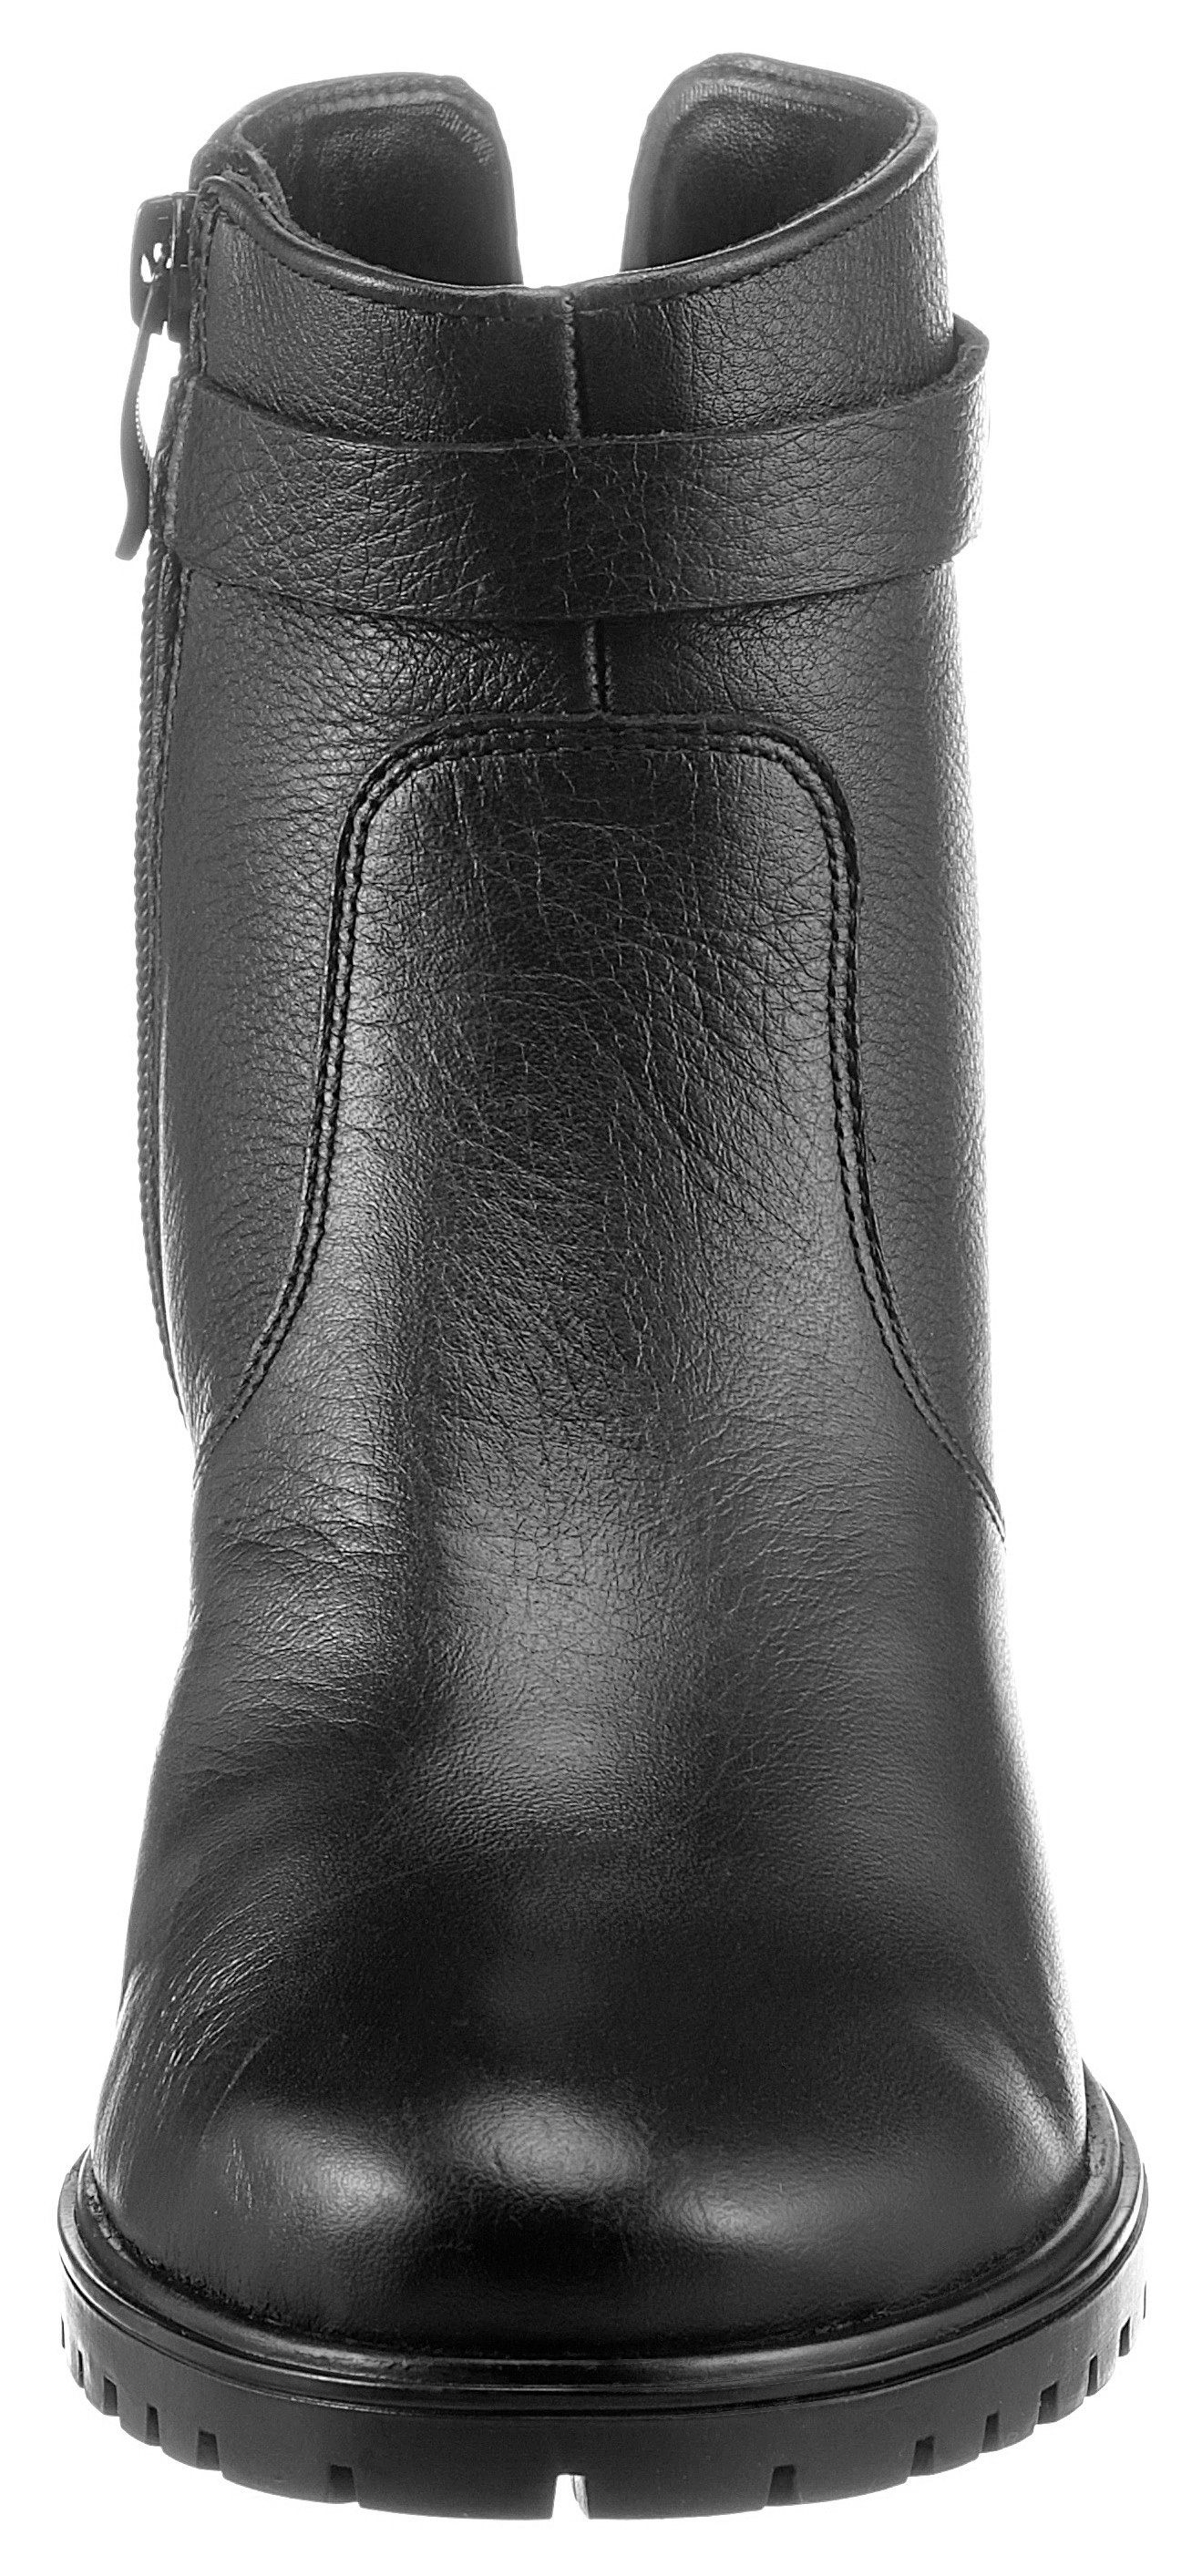 G-Weite schwarz Stiefelette Ara in RONDA Optik, klassischer